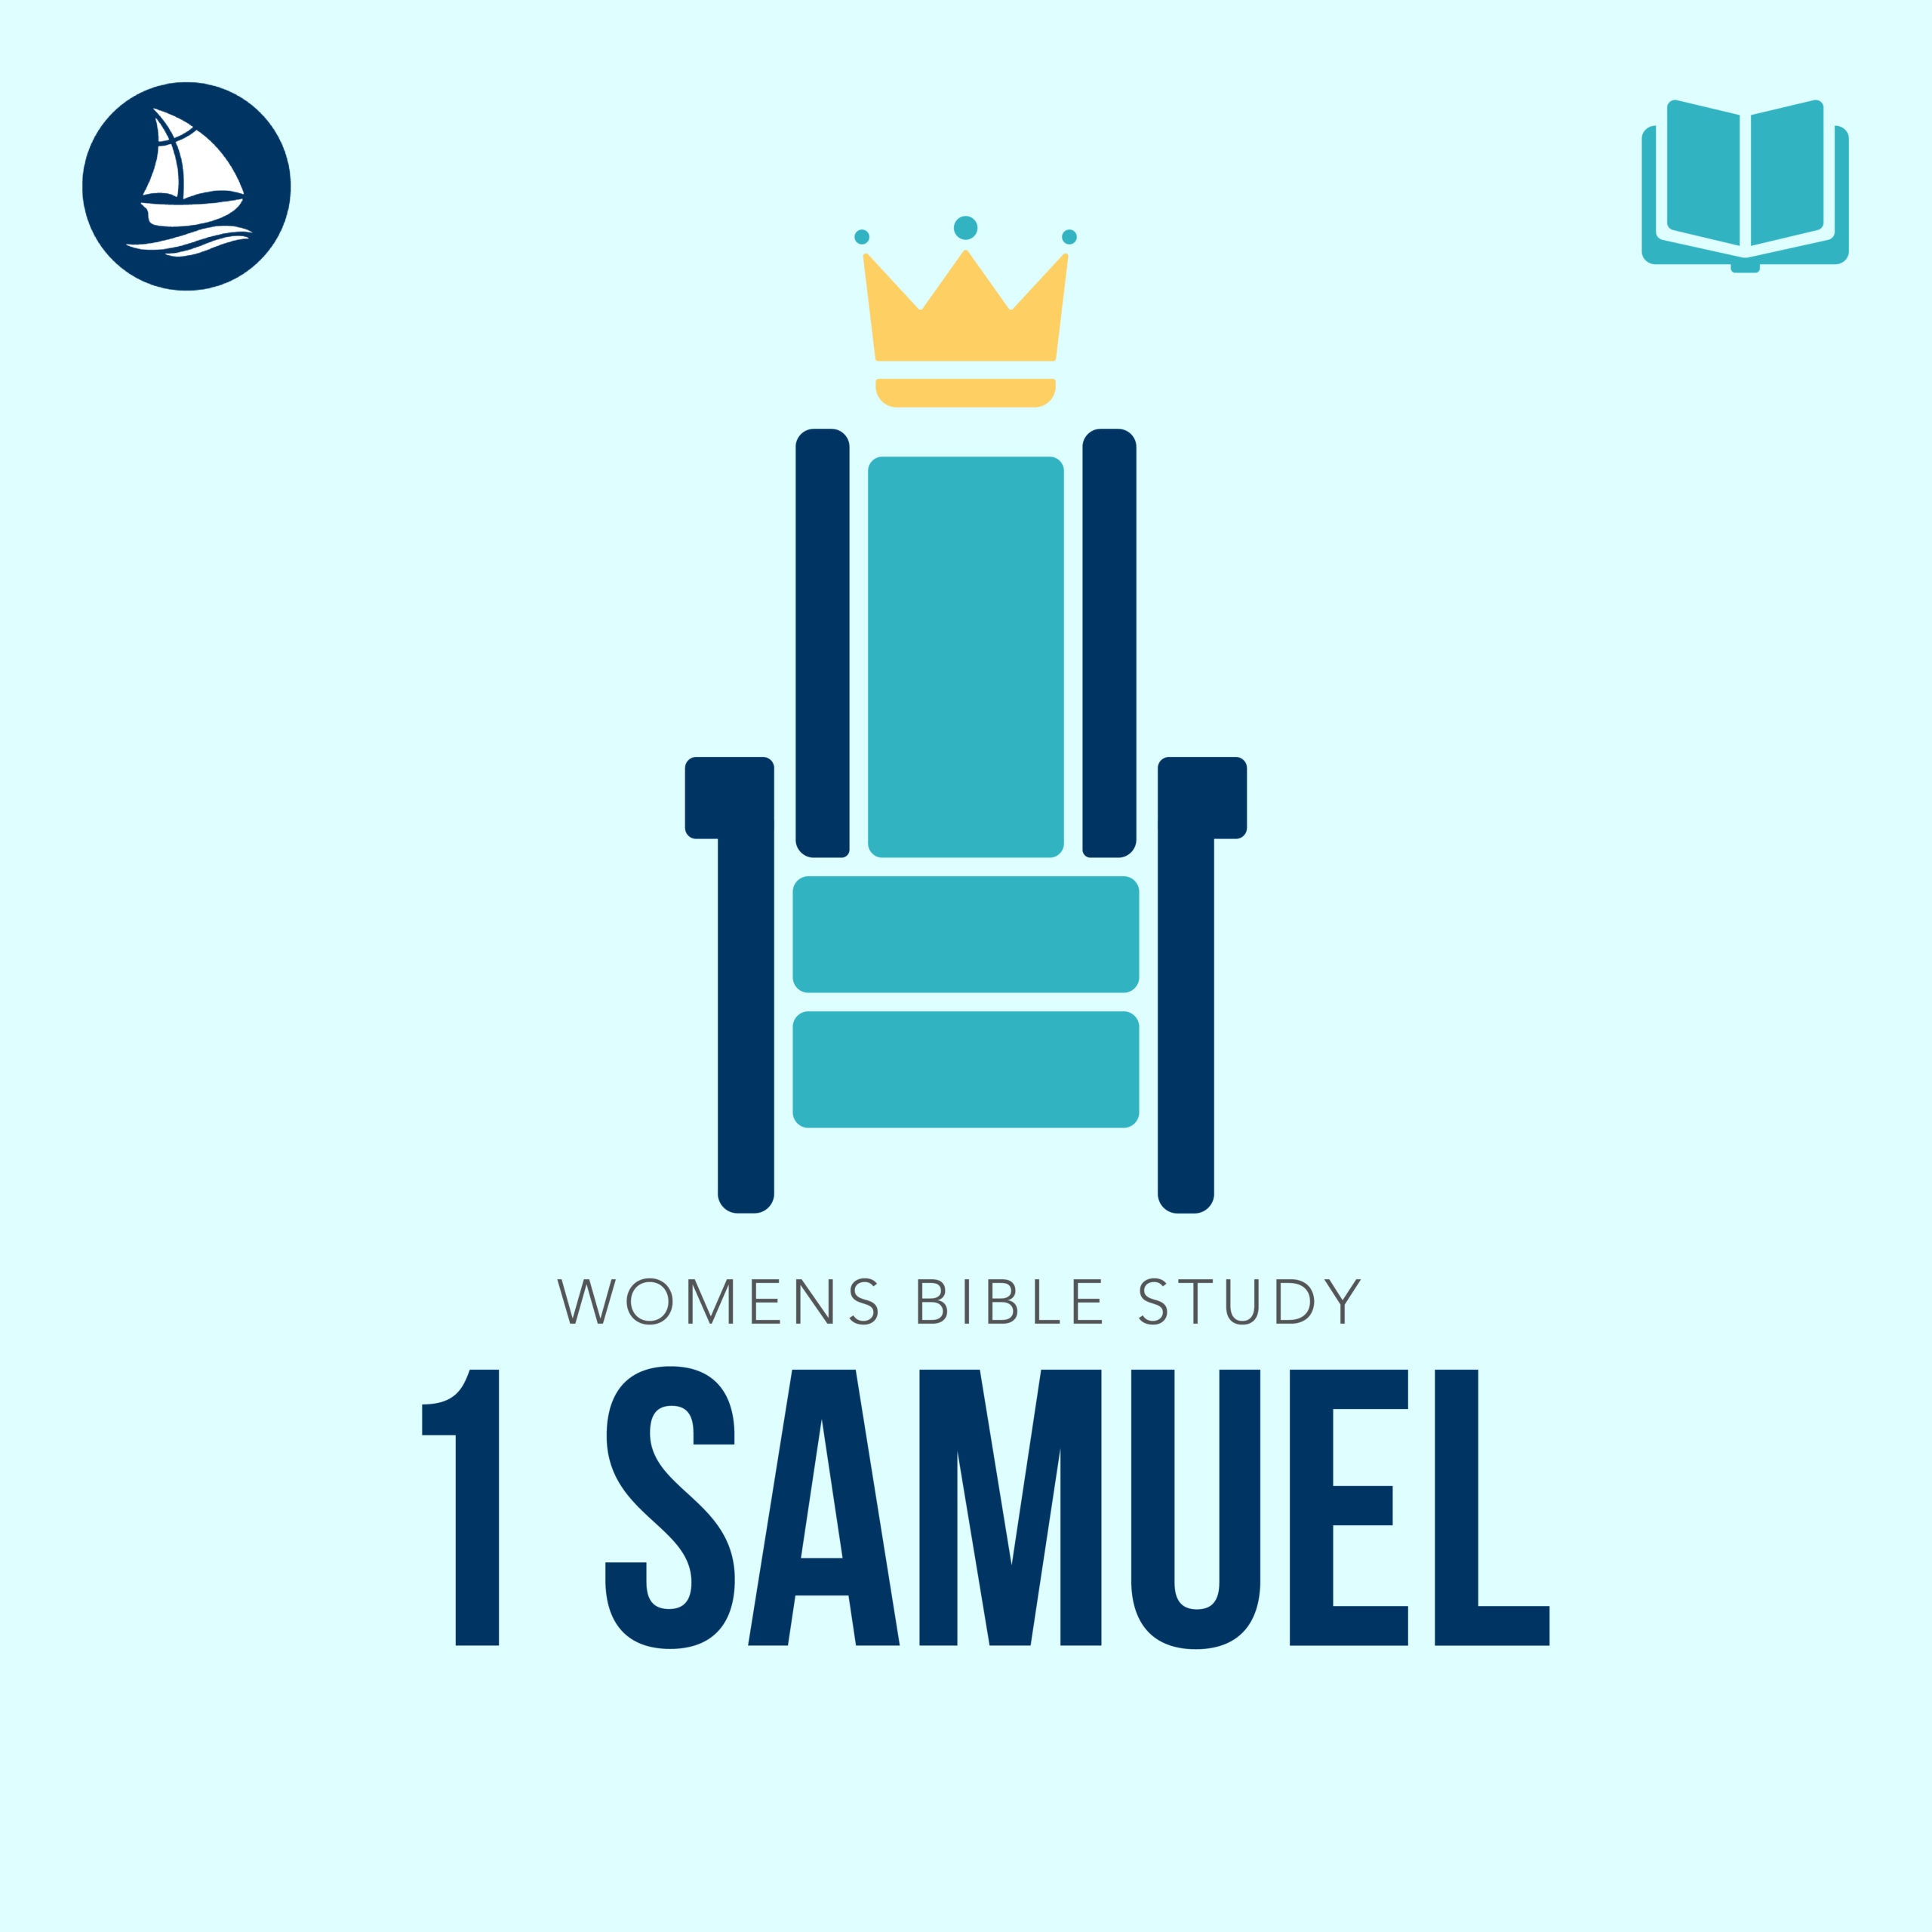 1 Samuel 2